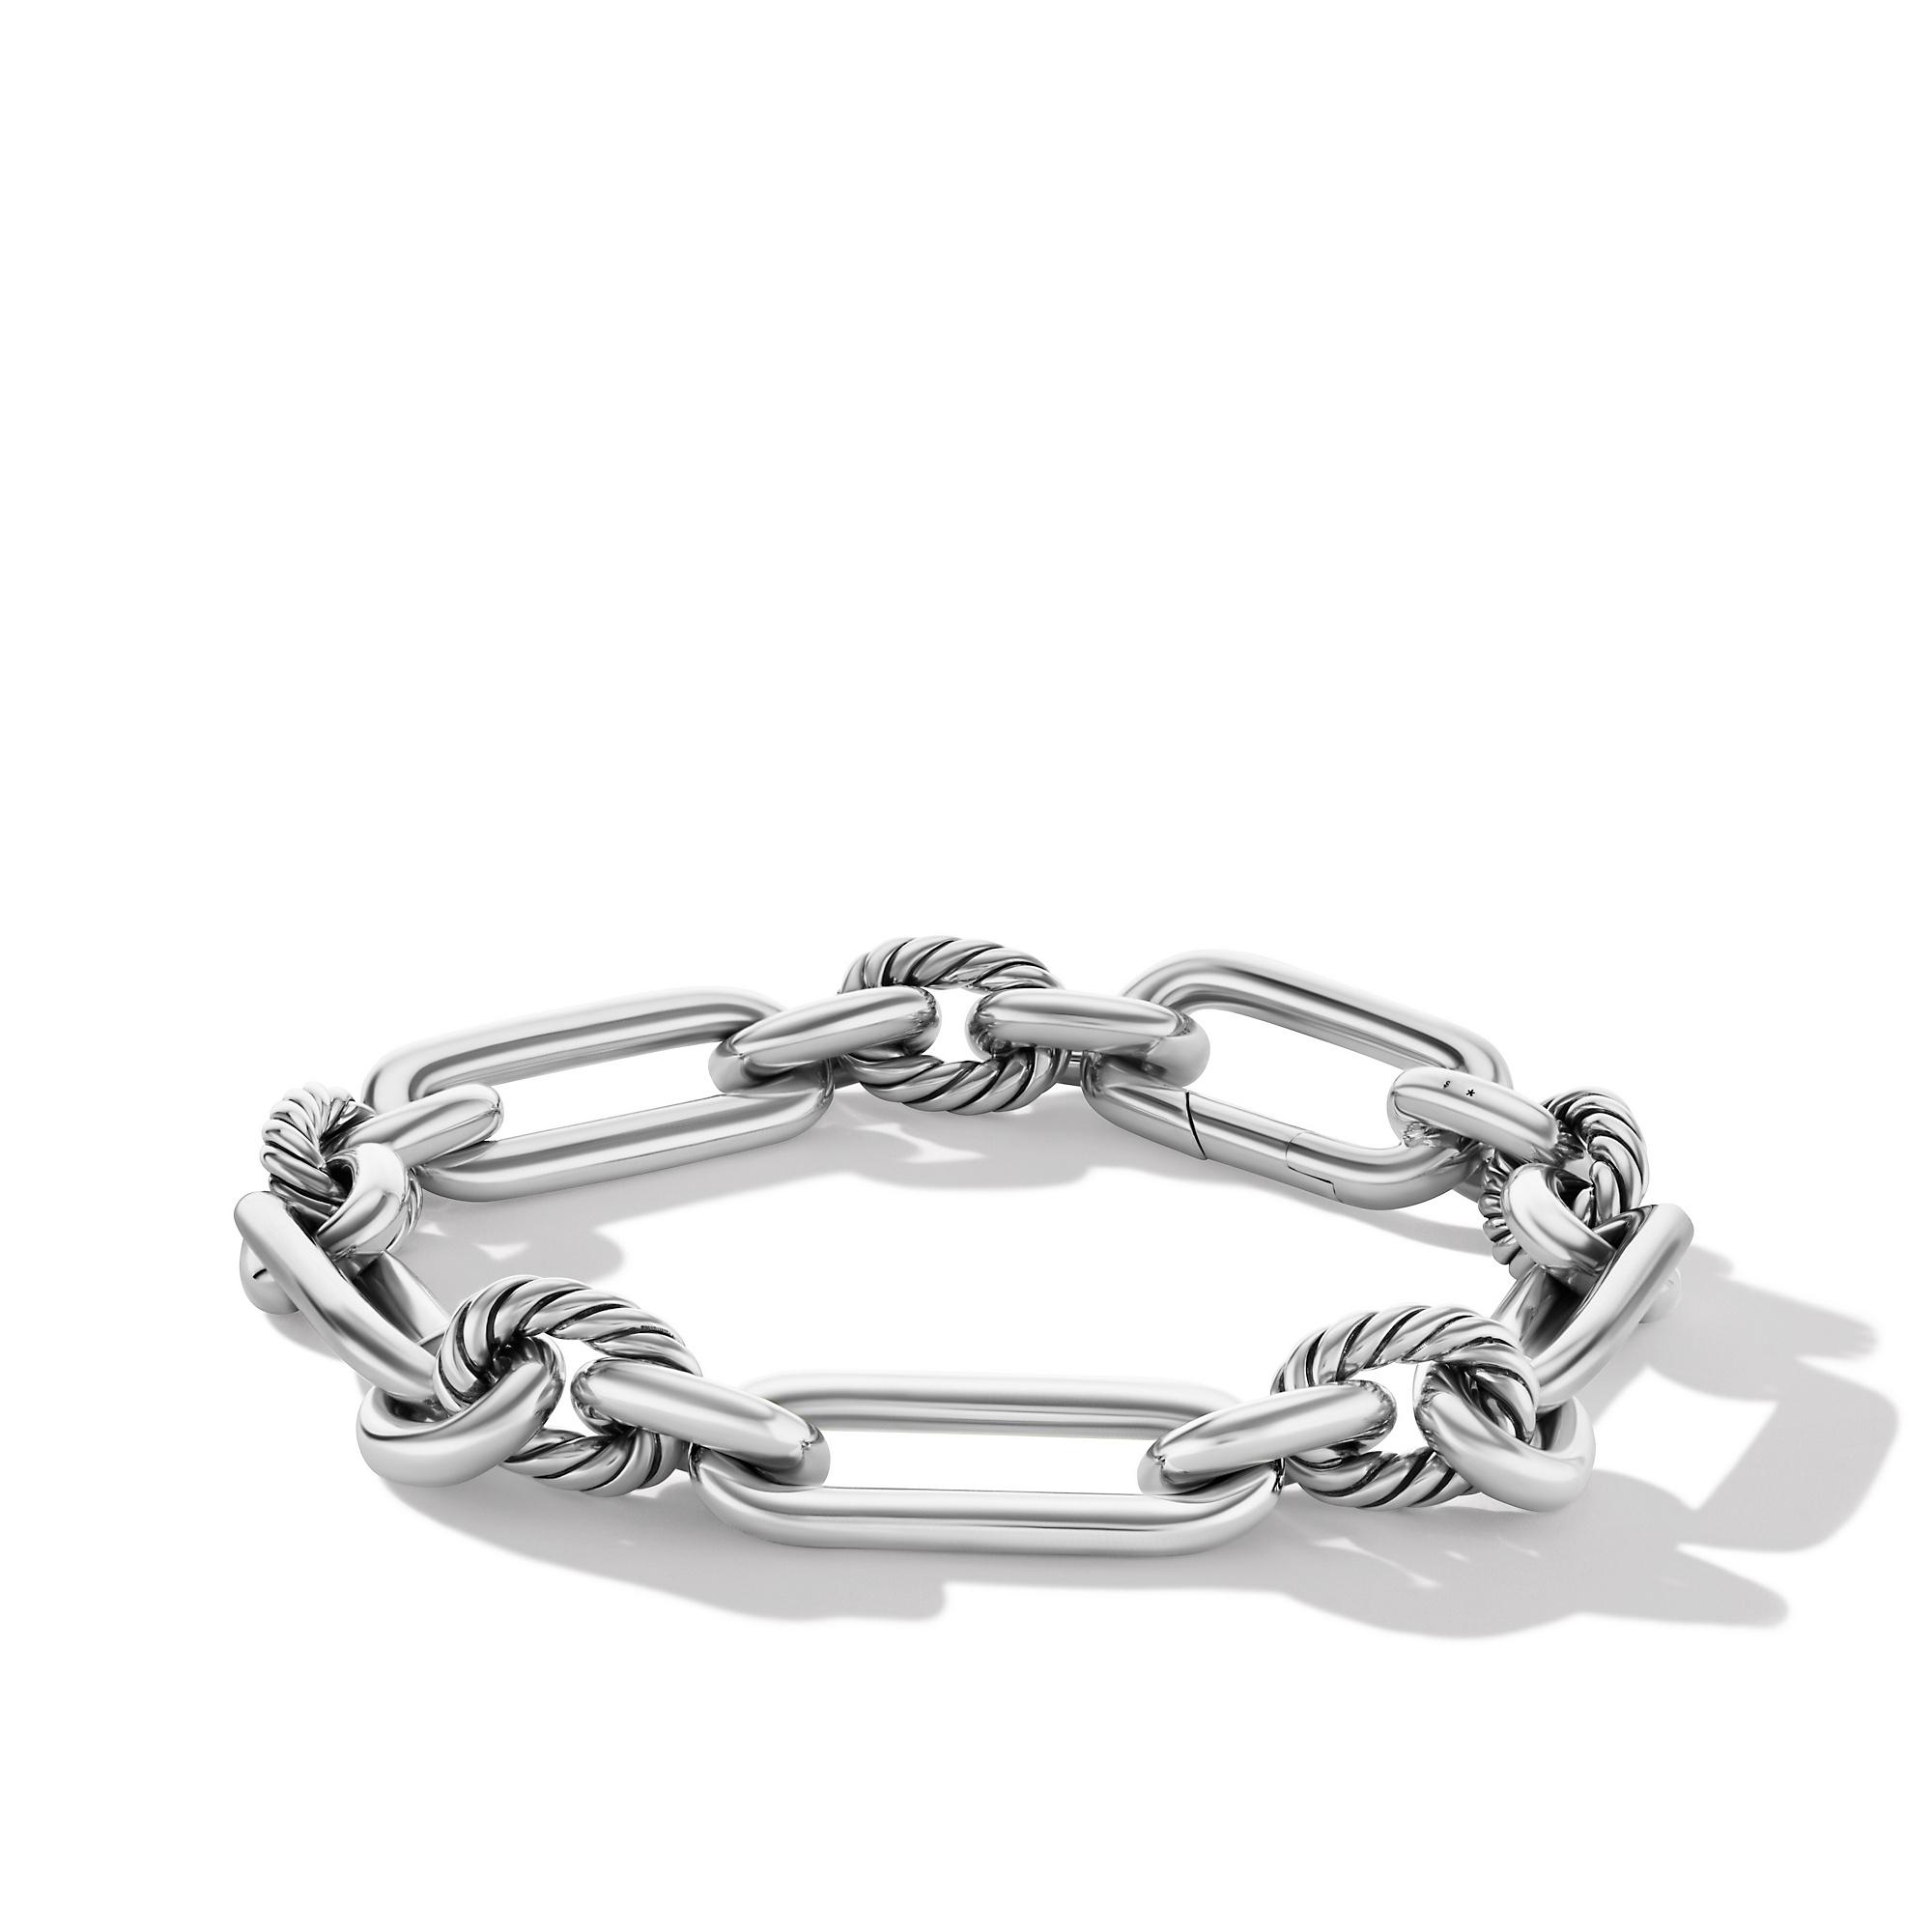 David Yurman Lexington Chain Bracelet, size medium